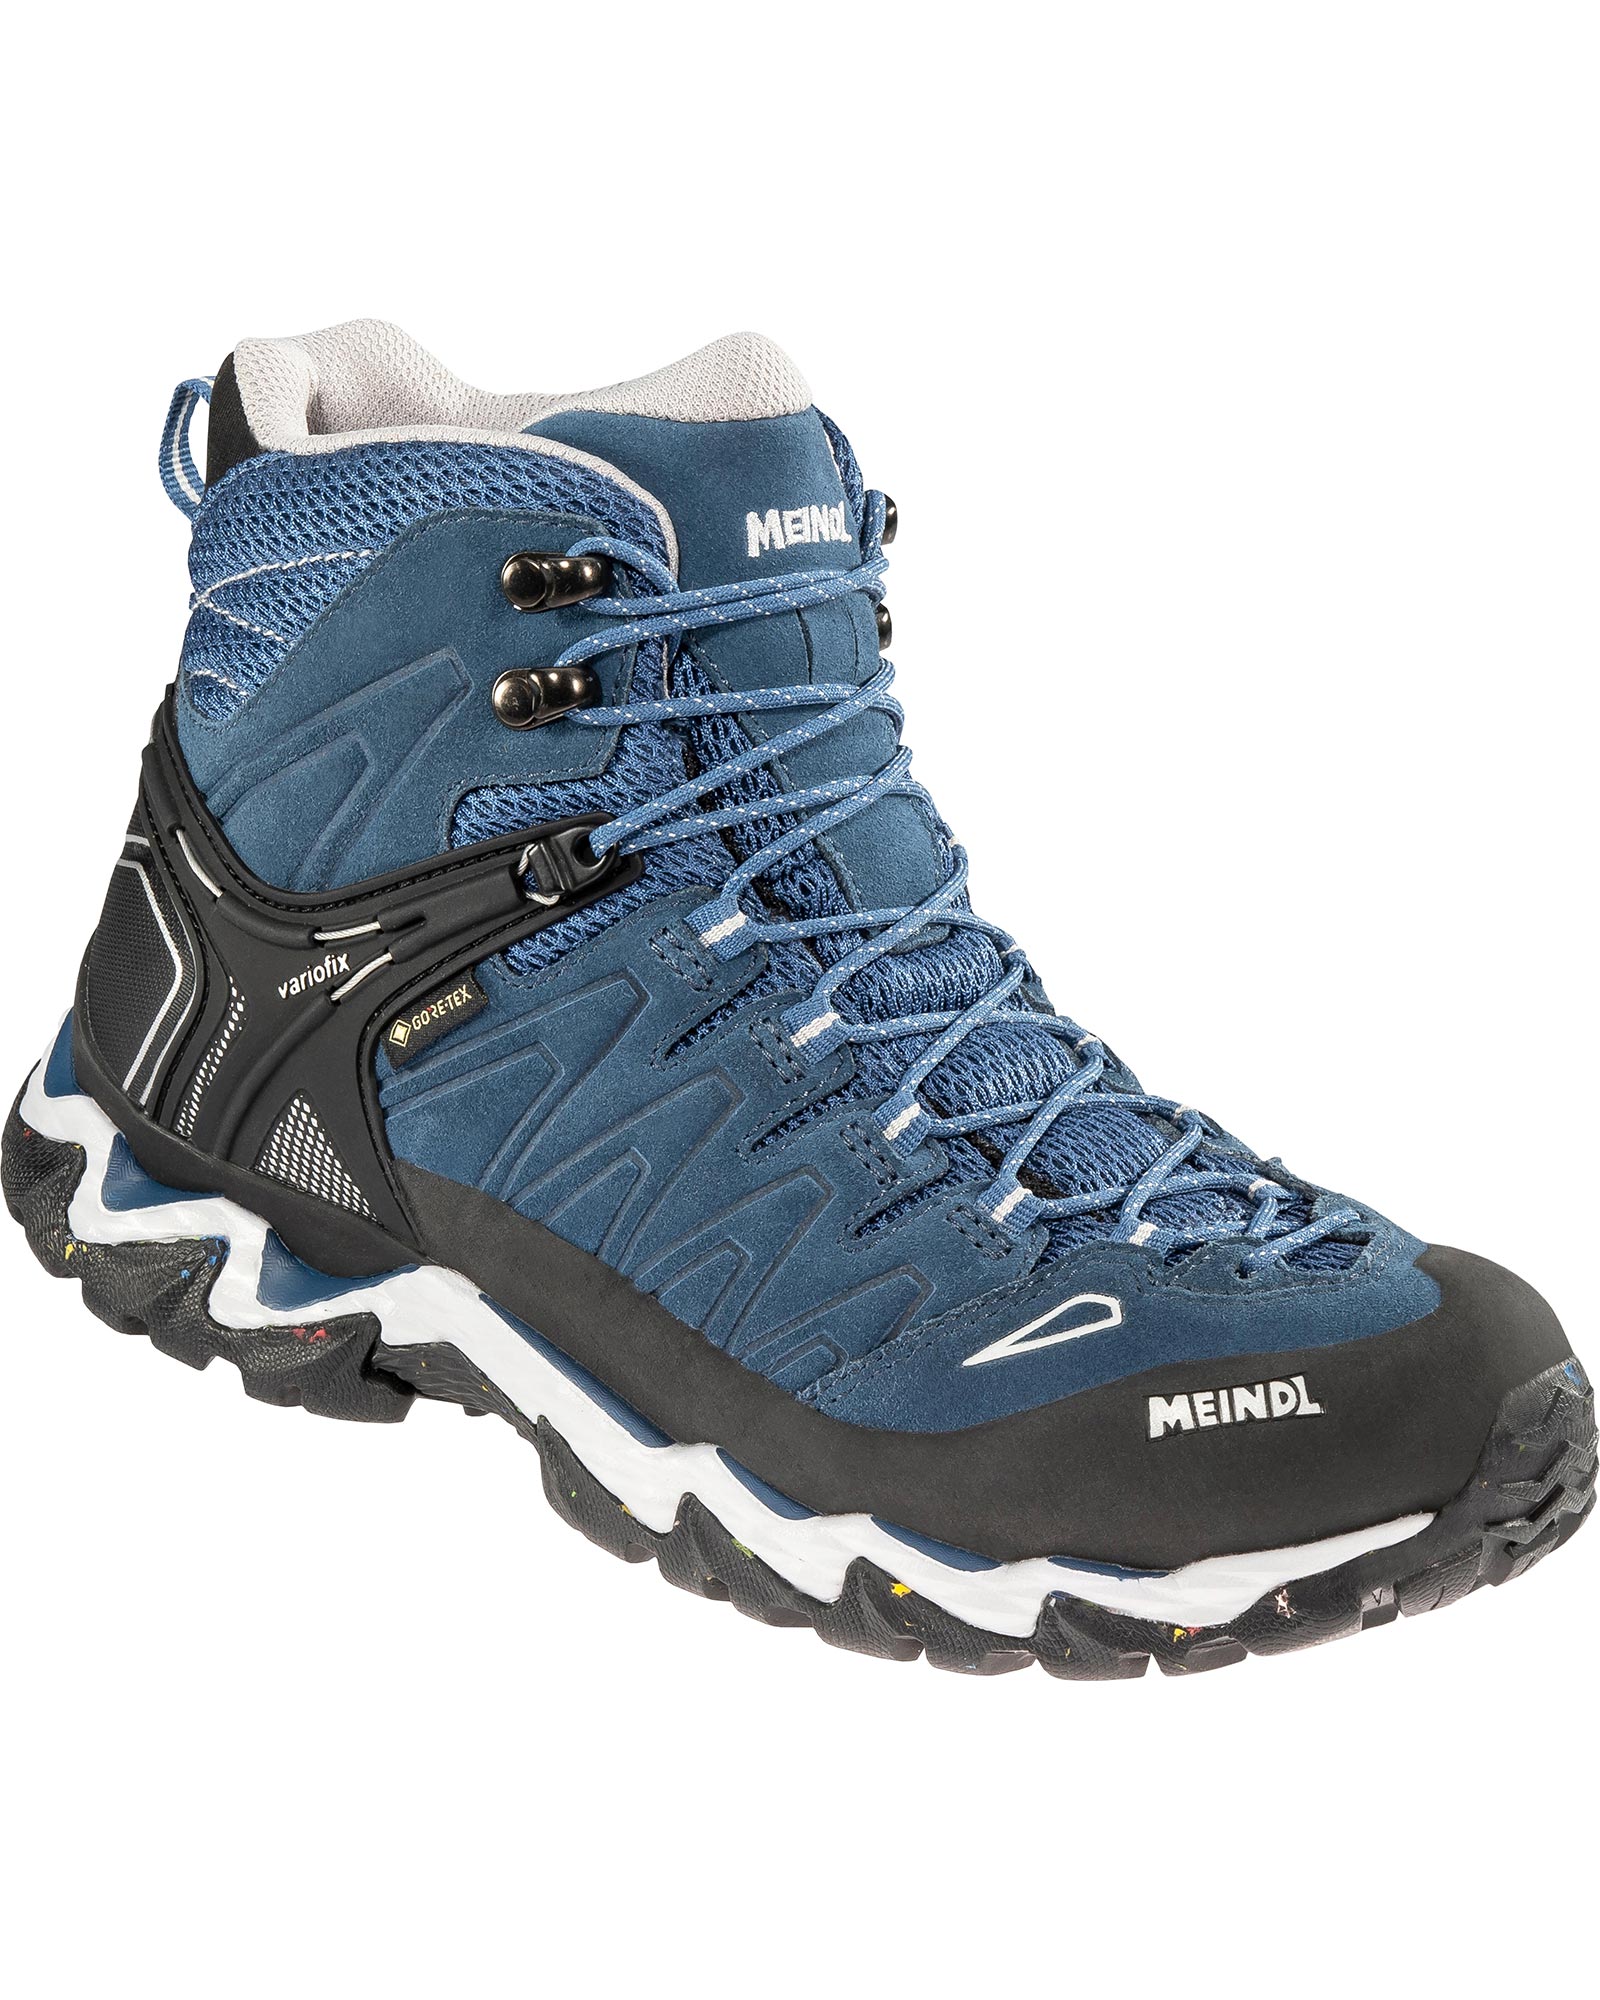 Meindl Lite Hike GORE TEX Women’s Boots - Blue/Light Blue UK 8